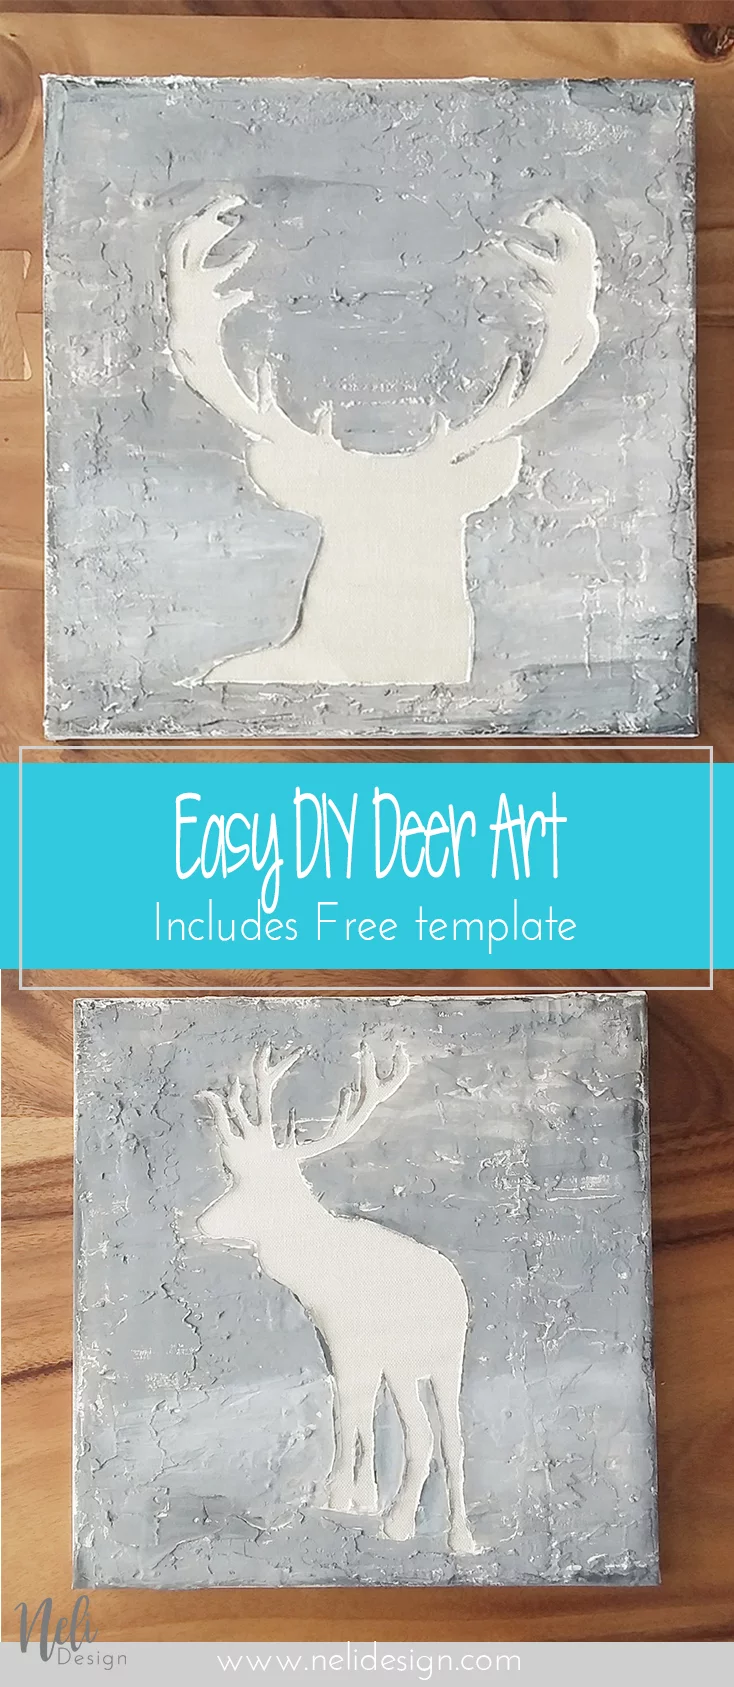 Pinterrest image saying Easy DIY Deer Art Includes free template